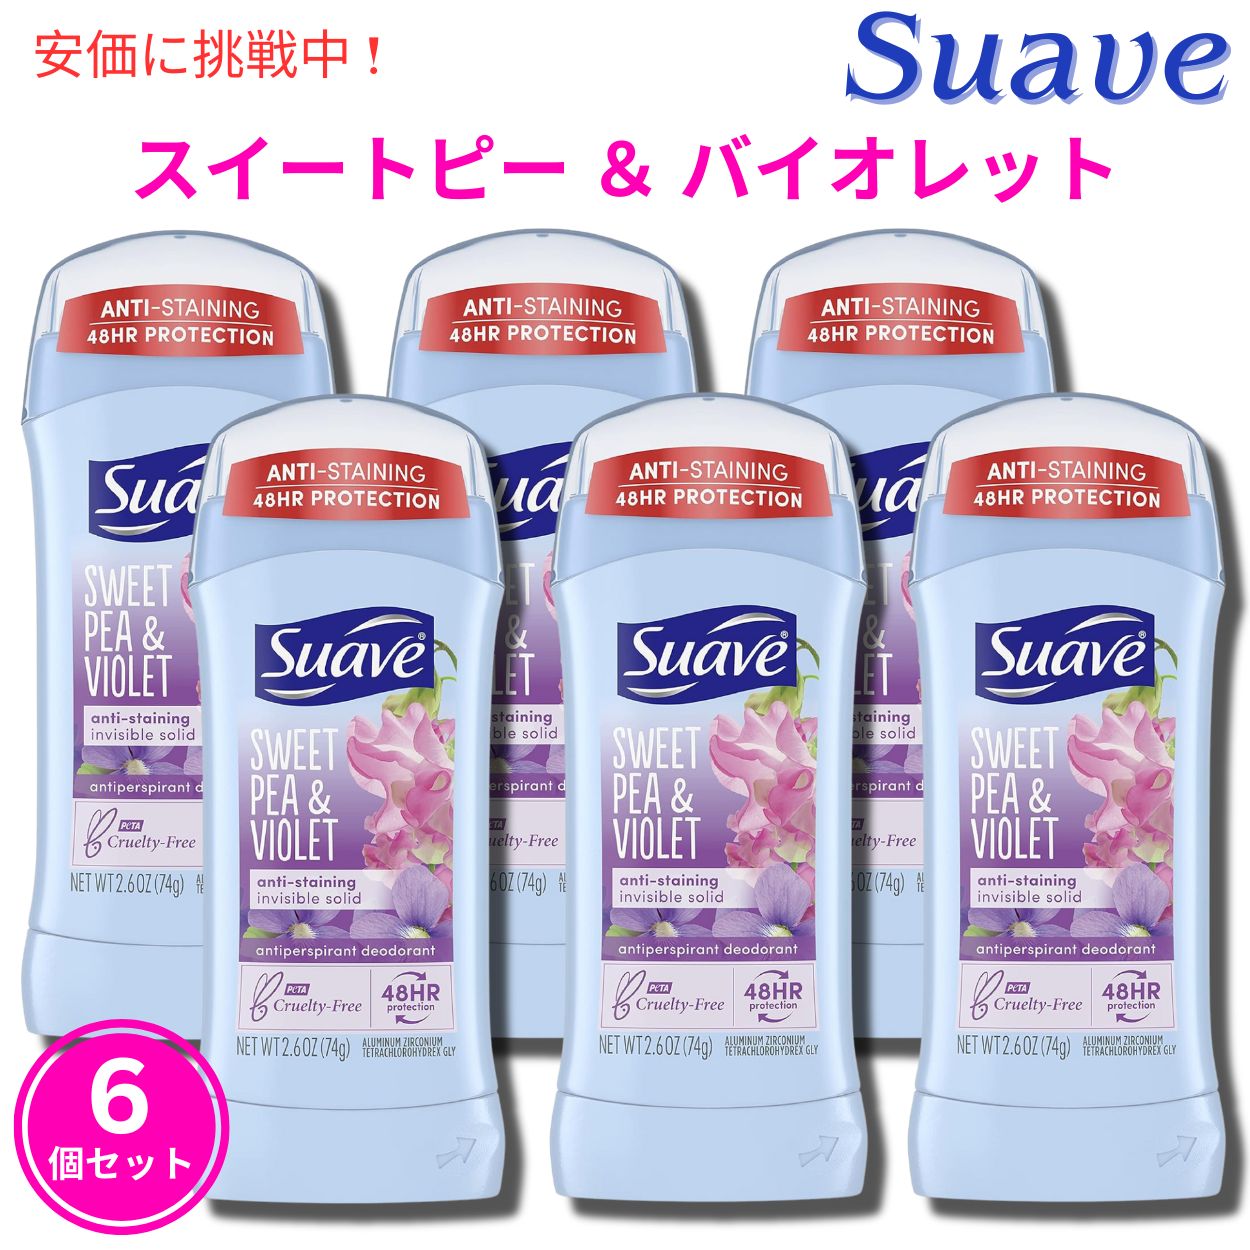 Sweetpea Violet Suave XA[u fIhg XC[gs[ oCIbg 74g XeBbN 6Zbg Deodorant Stick Set of 6